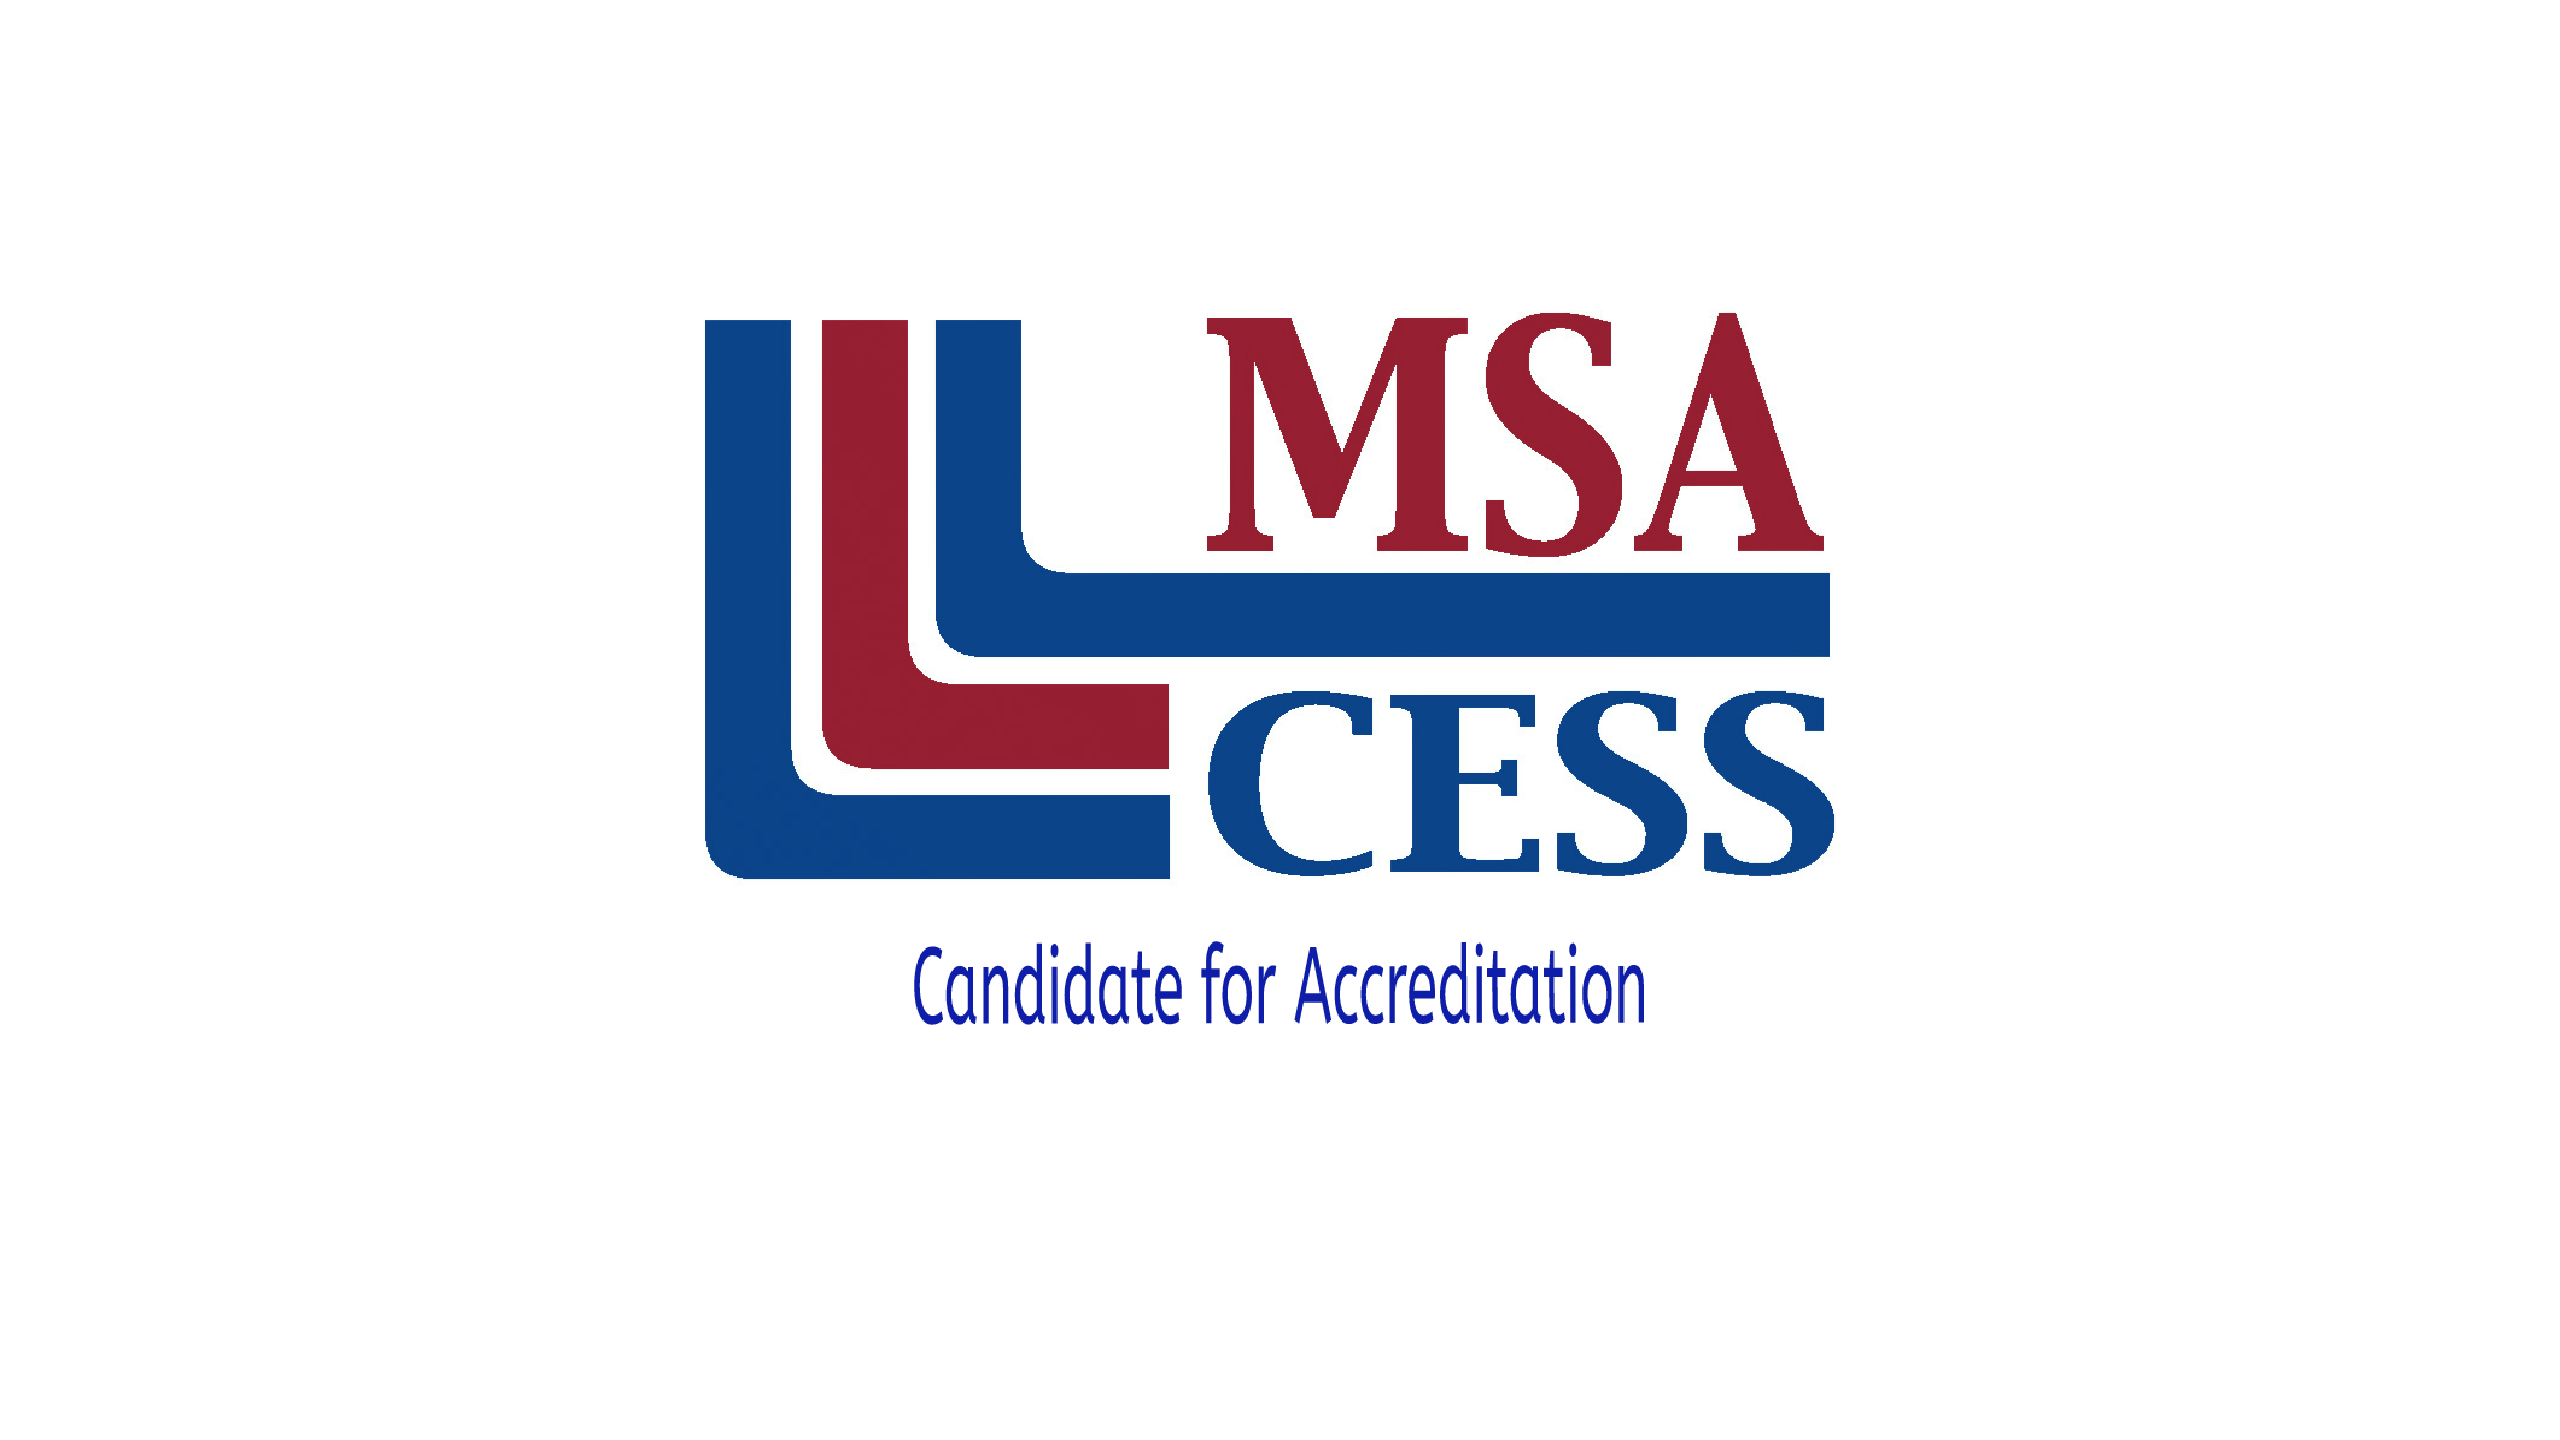 TEECS is pursuing MSA-CESS accreditation!